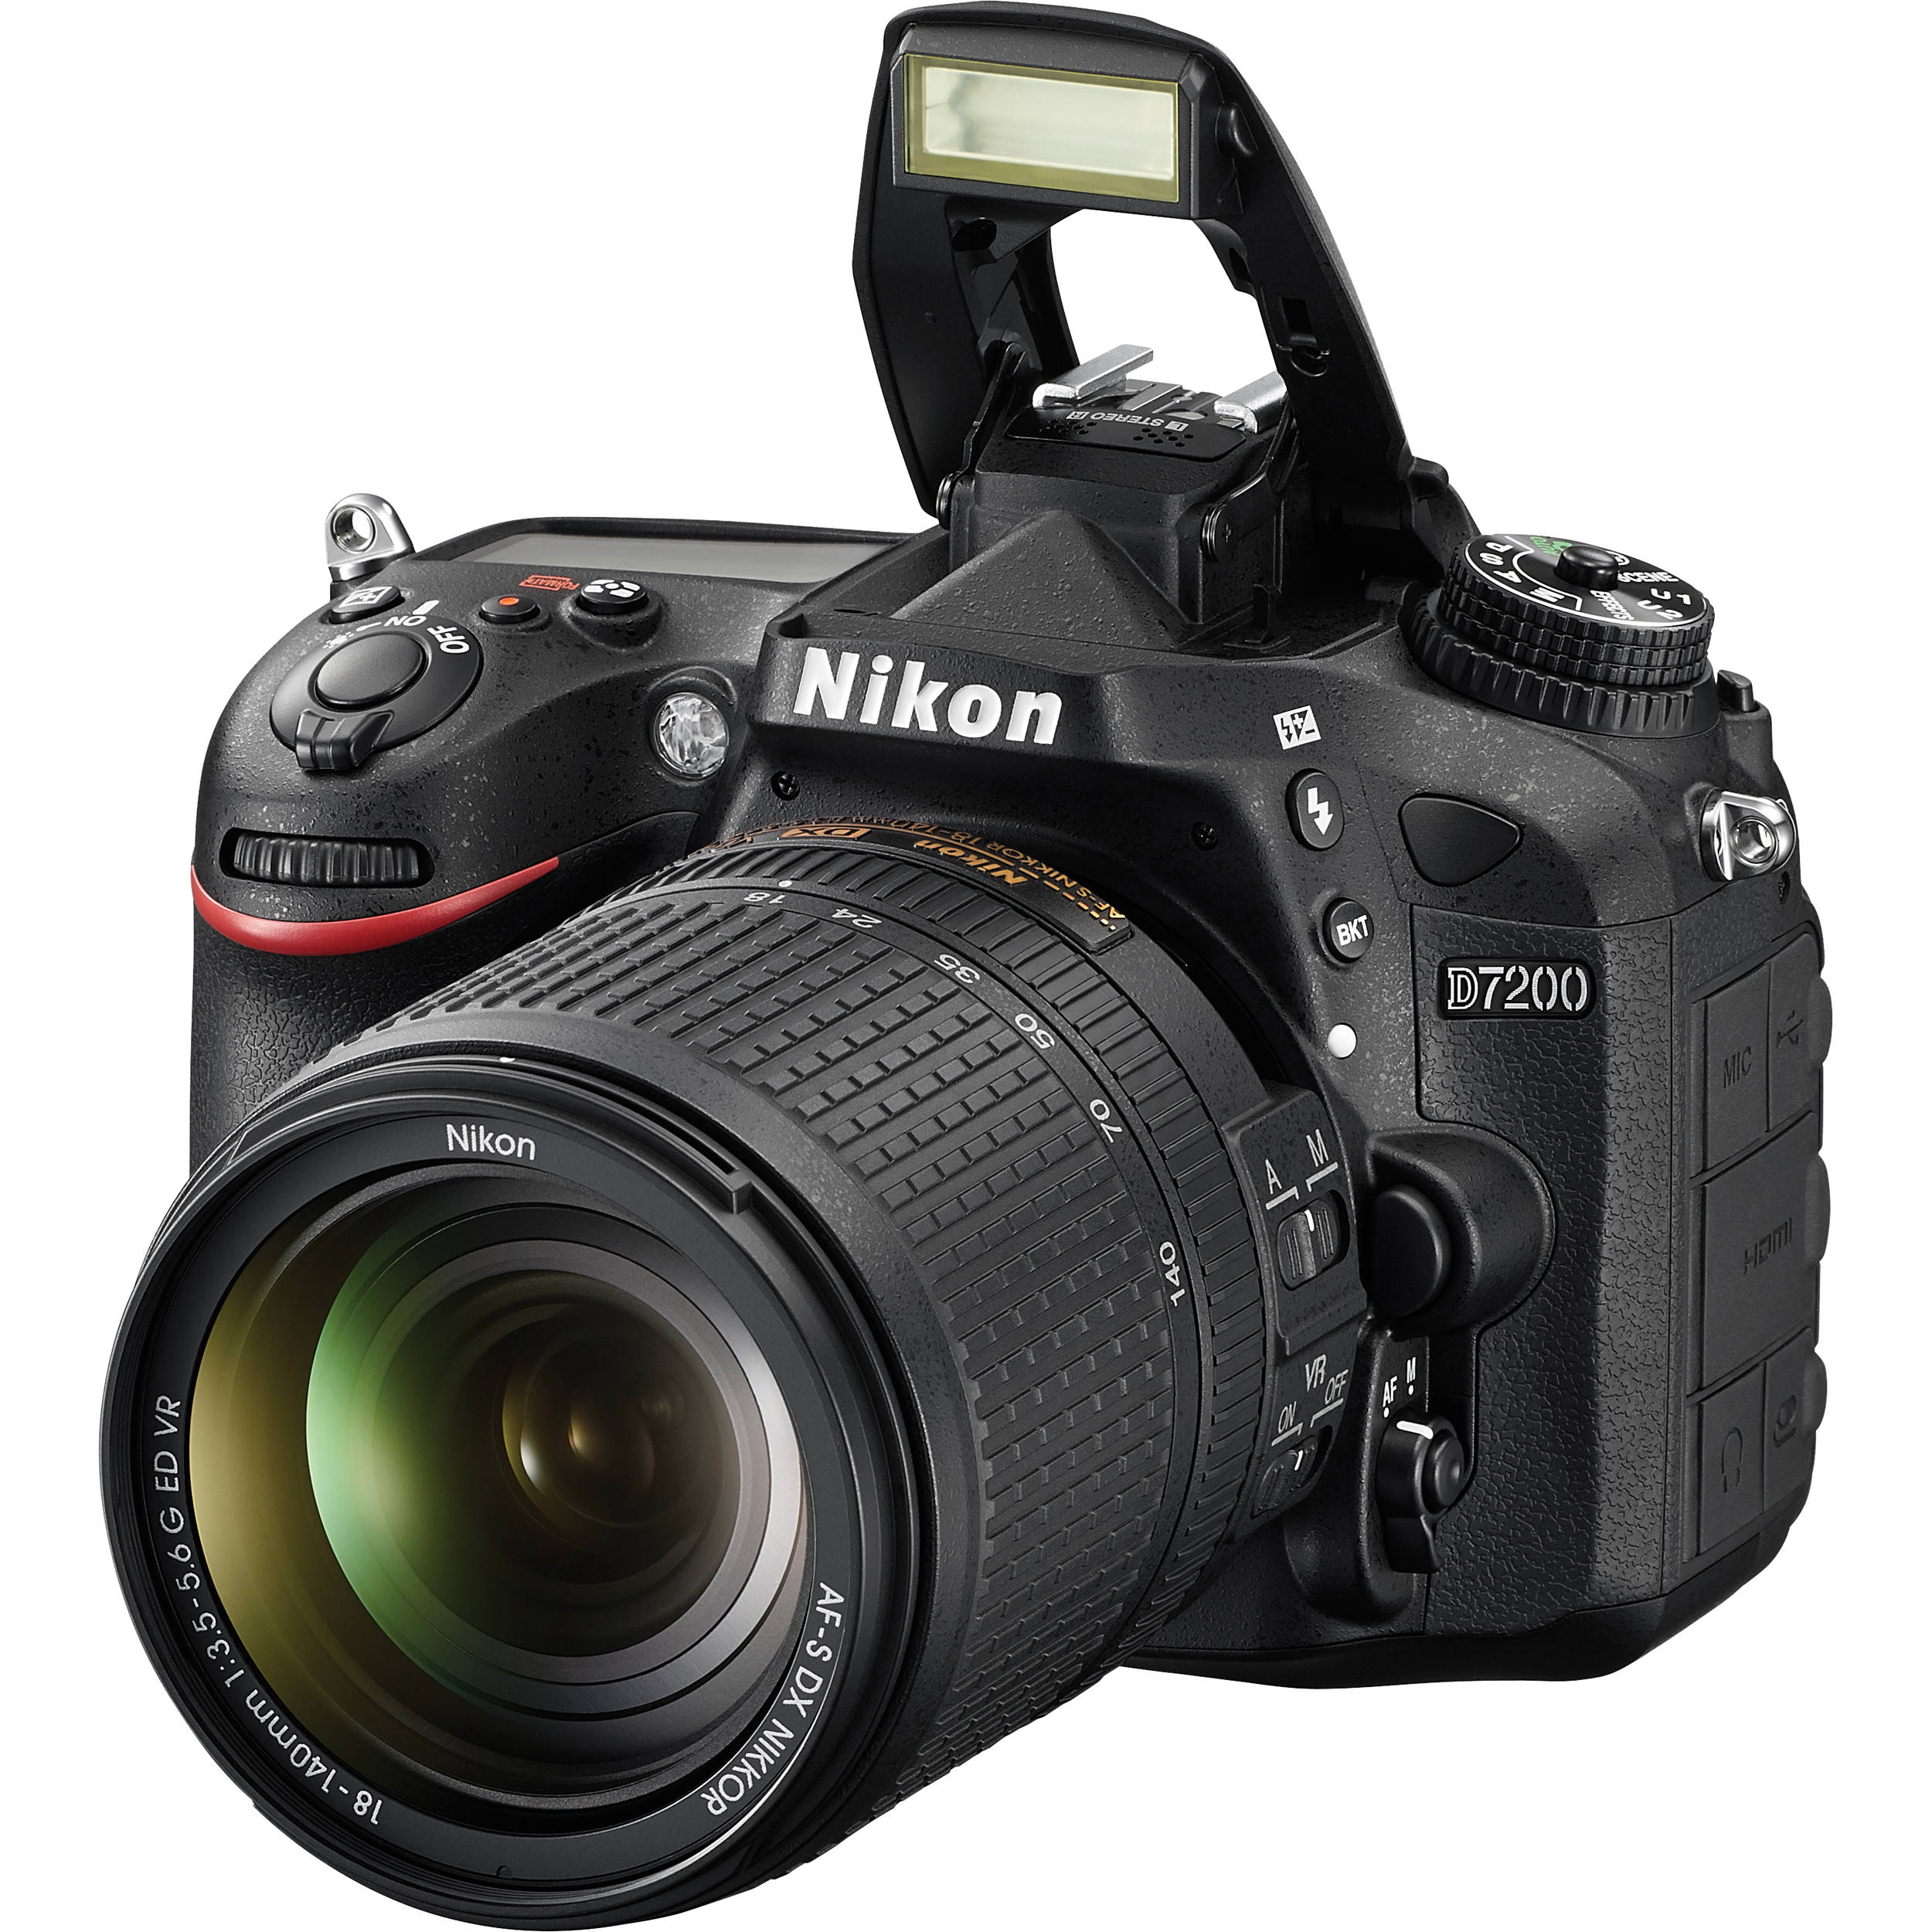 Nikon D7200 DSLR Camera with 18-140mm Lens 1555 (International Model) + MicroFiber Cloth + Deluxe Lens Pouch + Carrying Case Bundle